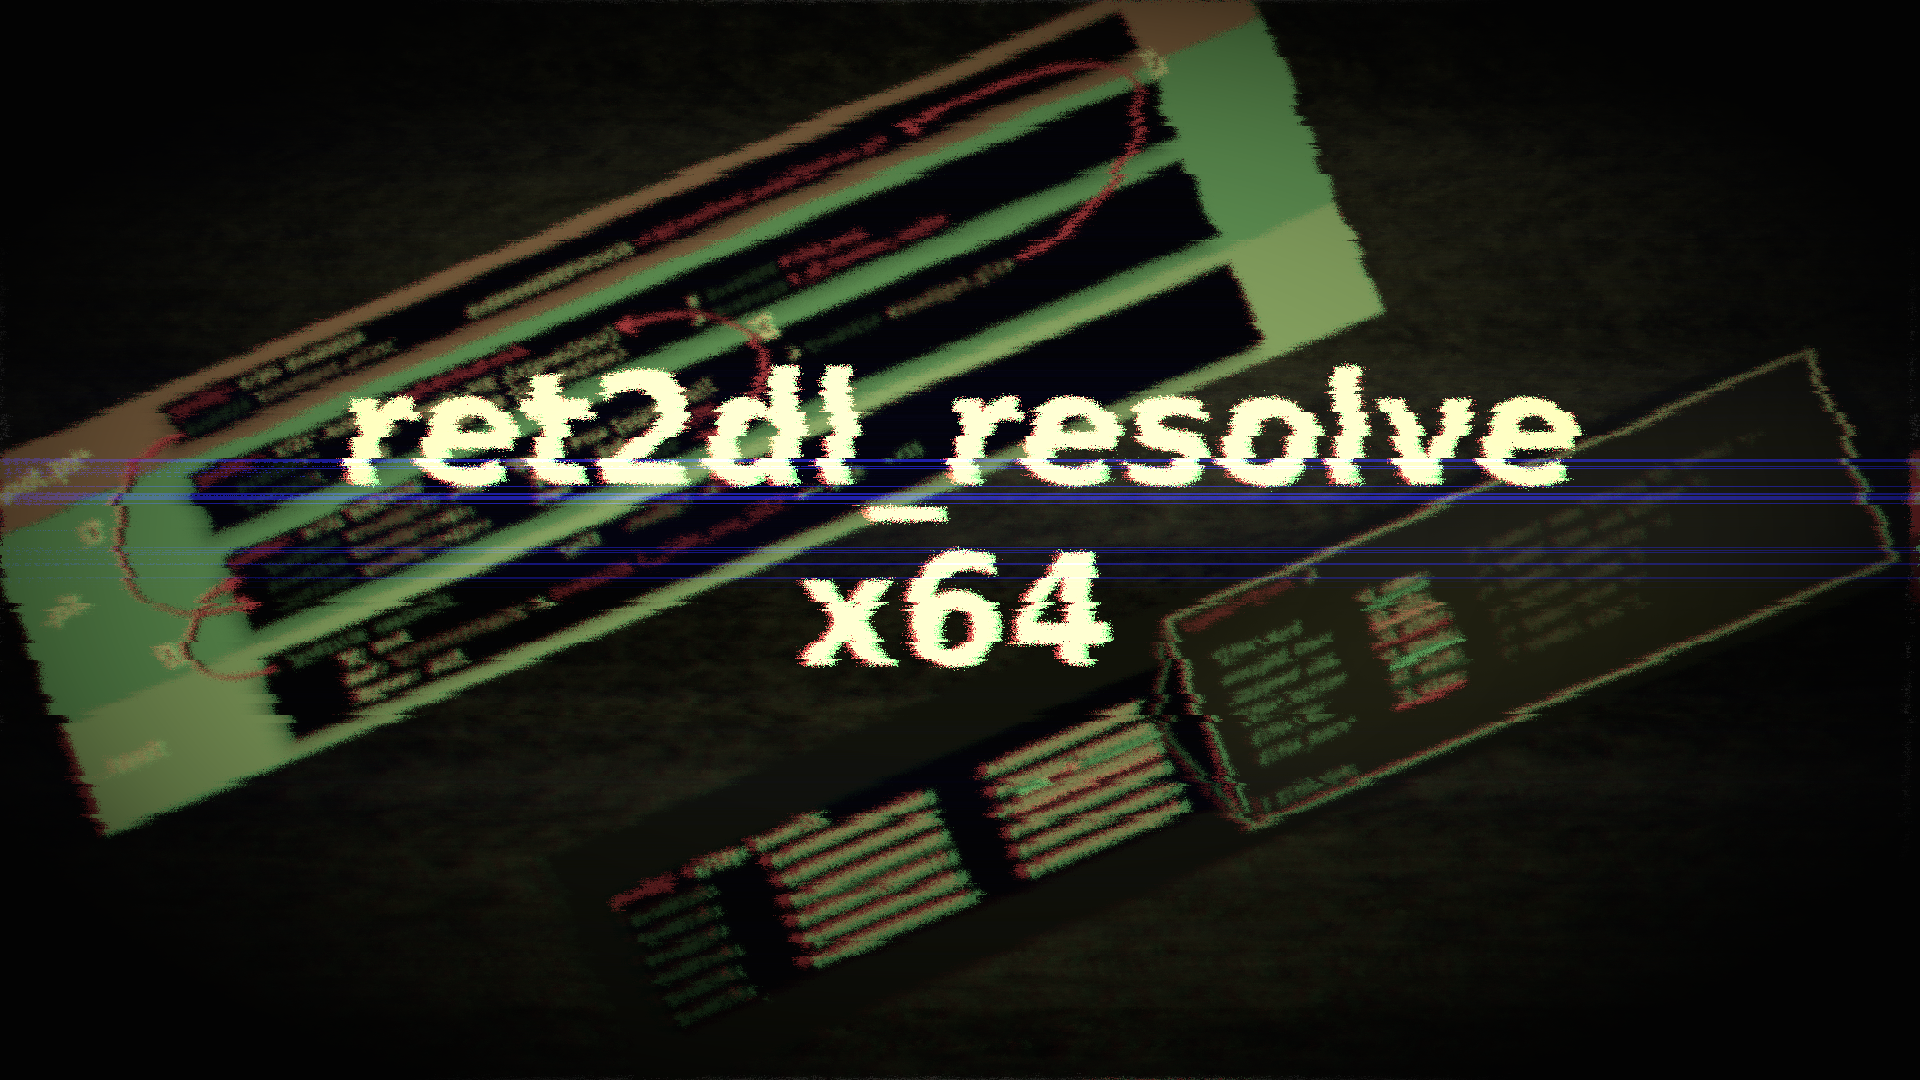 ret2dl_resolve x64: Exploiting Dynamic Linking Procedure In x64 ELF Binaries